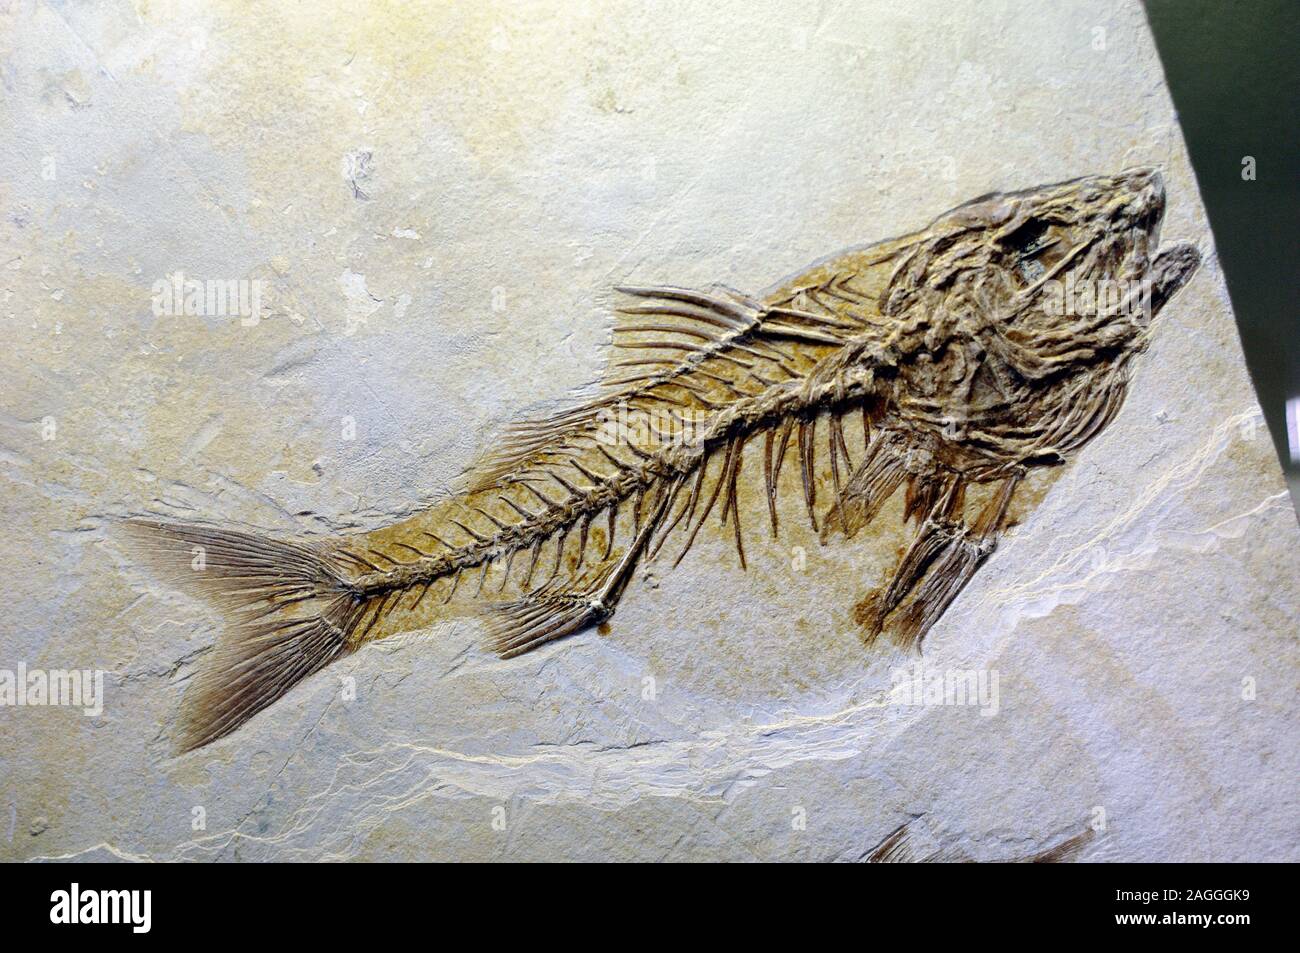 Dapalis macrurus Pregnant Fossil Fish, Oligocene. Extinct Prehistoric Ray-Finned Fish Stock Photo